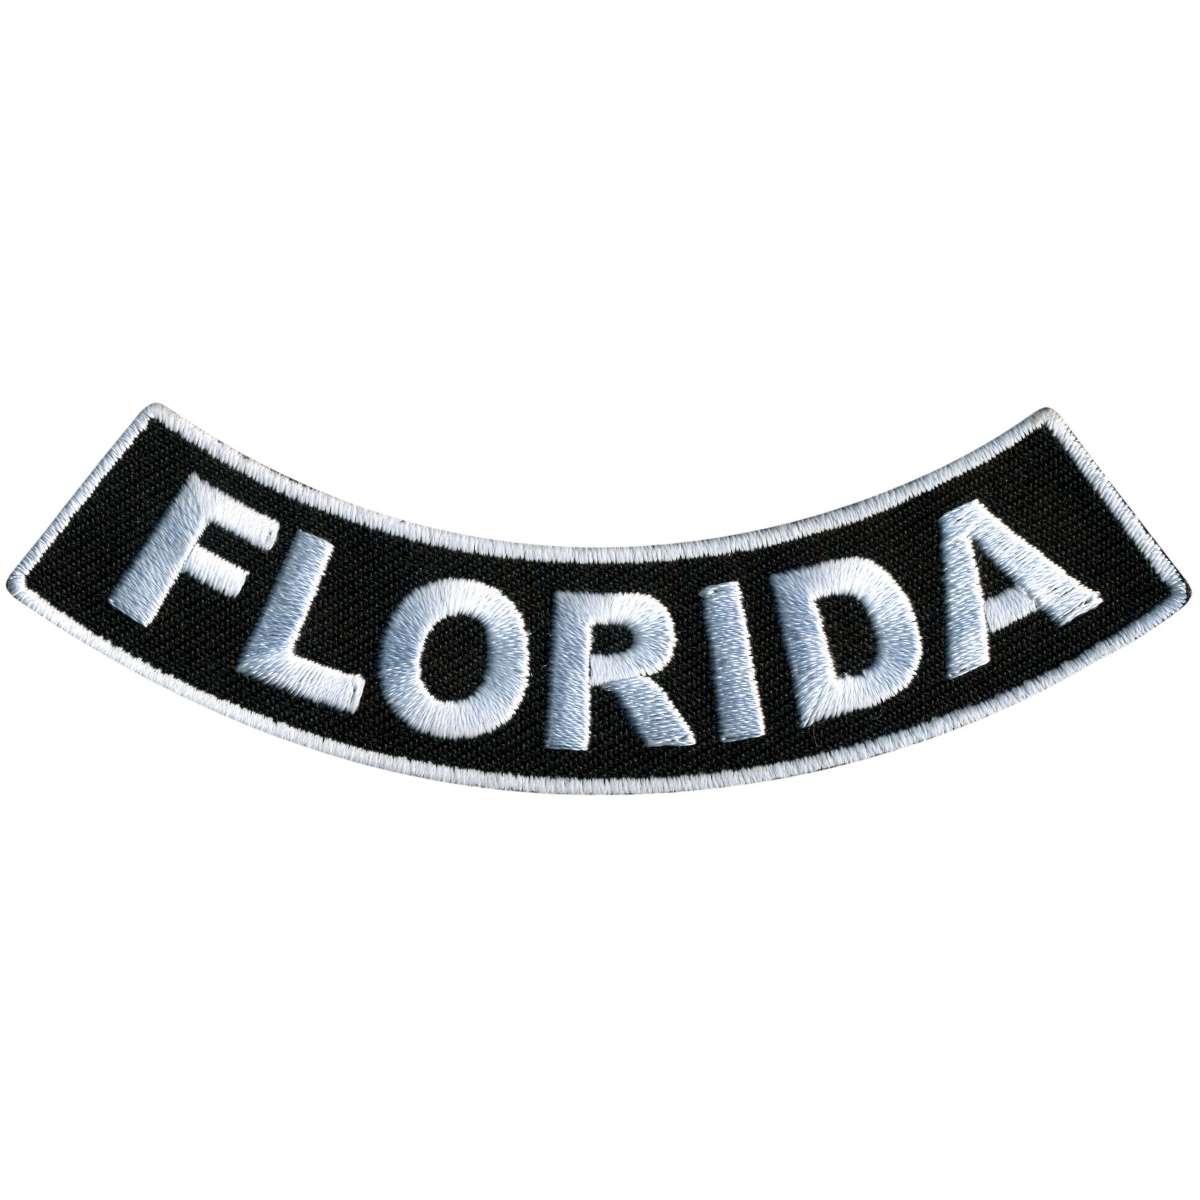 Hot Leathers Florida 4” X 1” Bottom Rocker Patch PPM5018